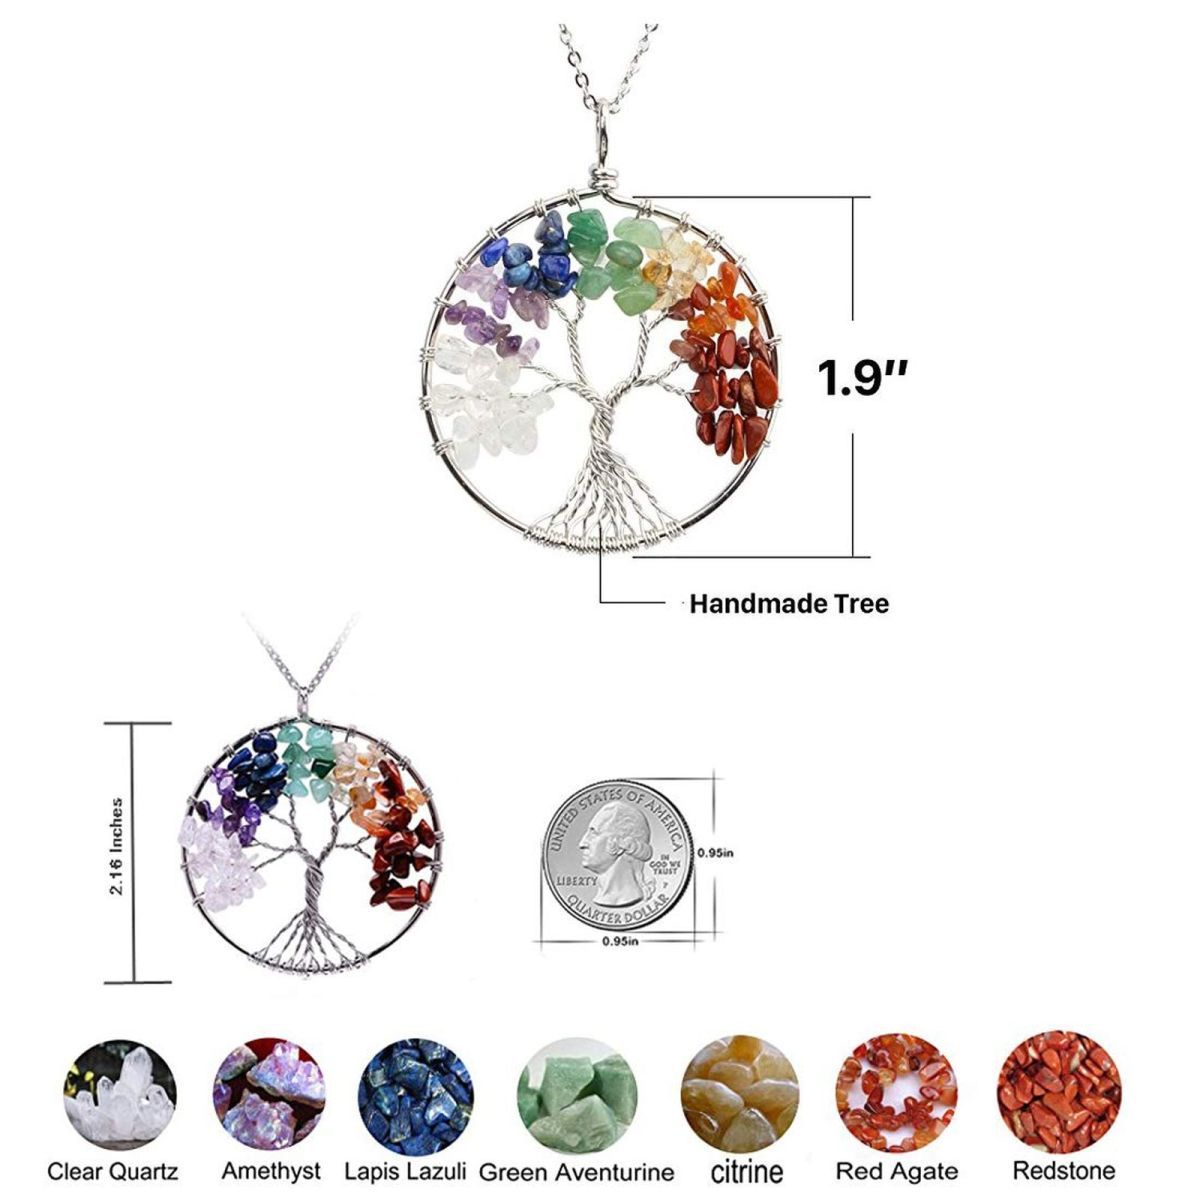 Handmade Tree of Life Necklace - Attract Abundance and Balance